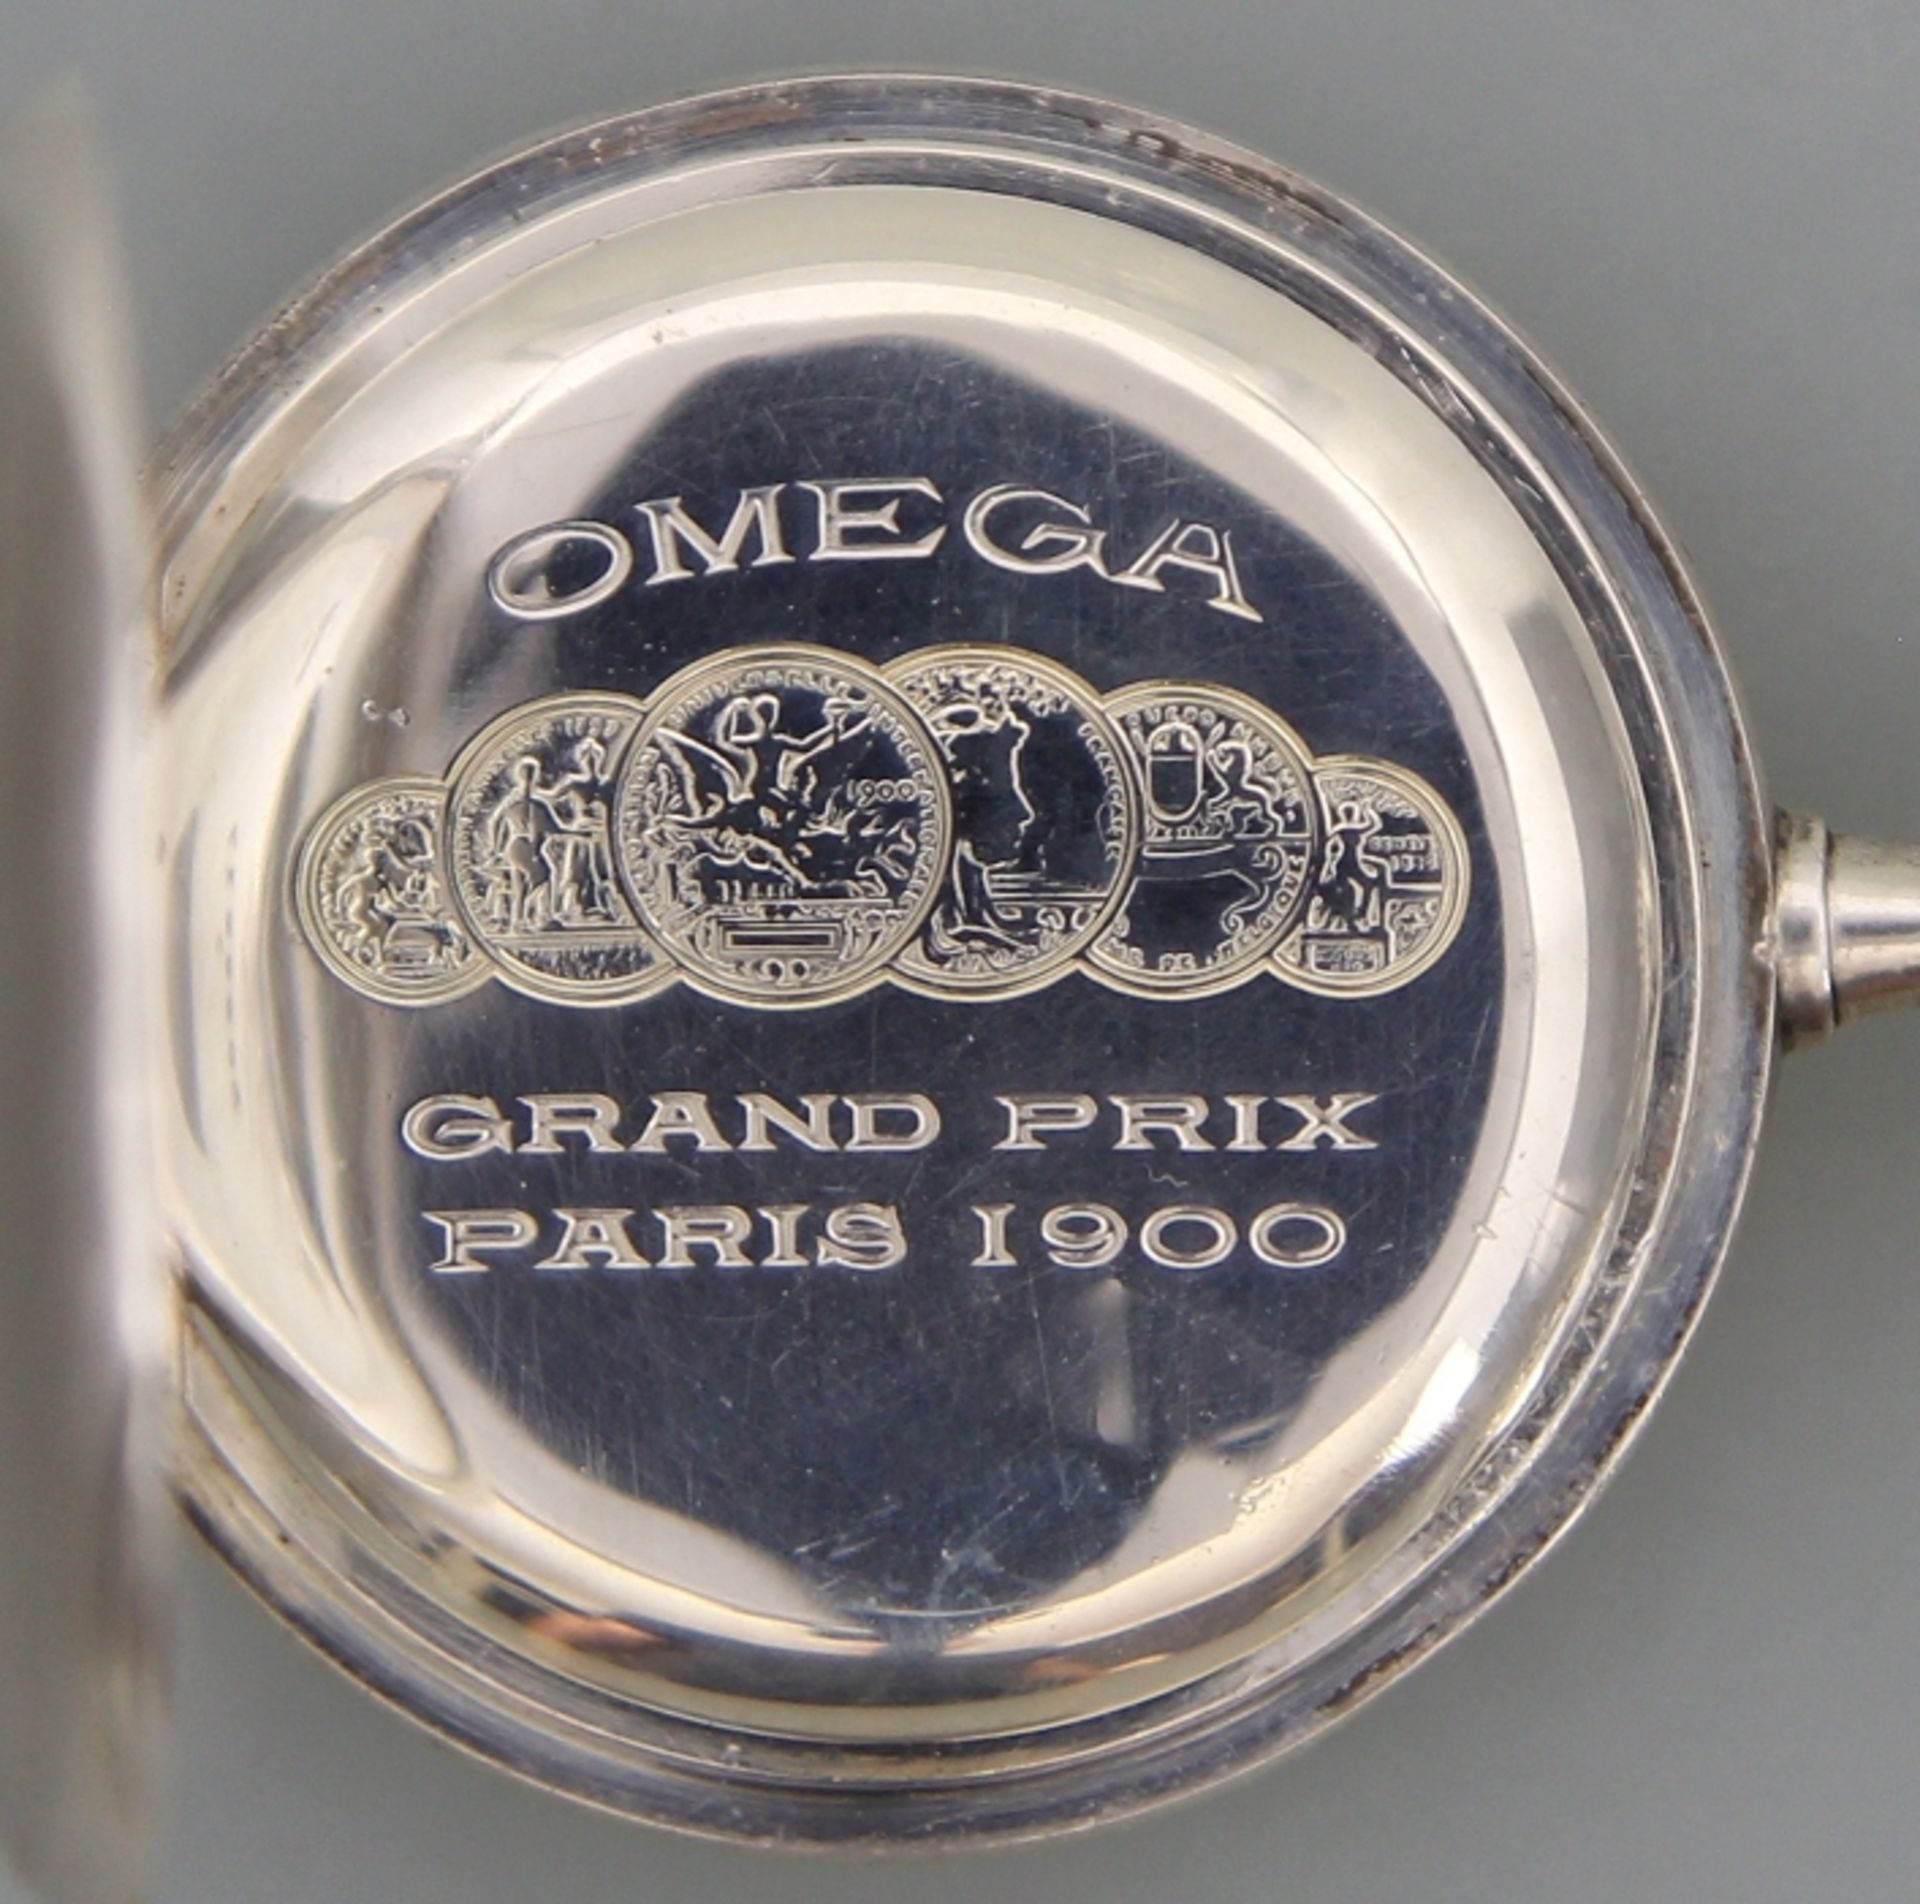 HTU - Chronograph "Omega" - Image 2 of 3